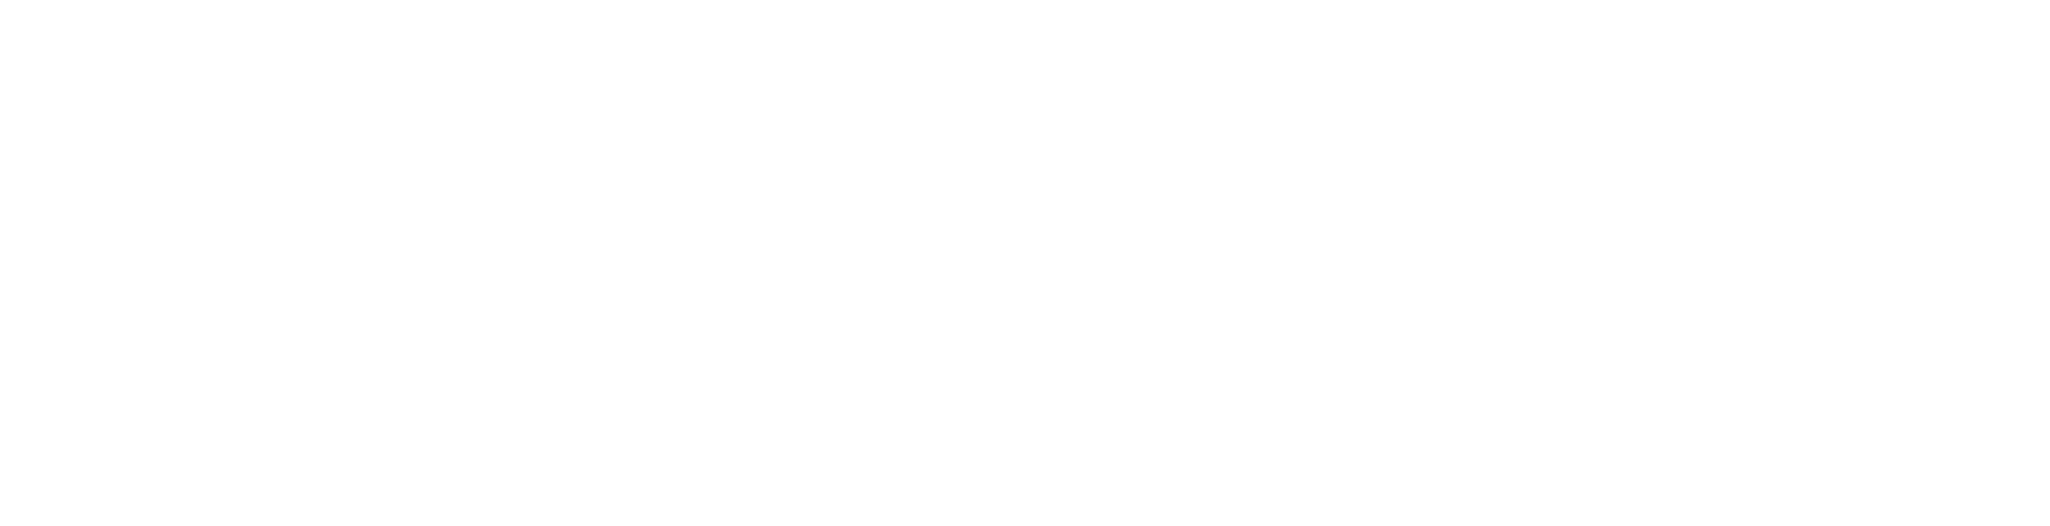 Linda Ford Poetry